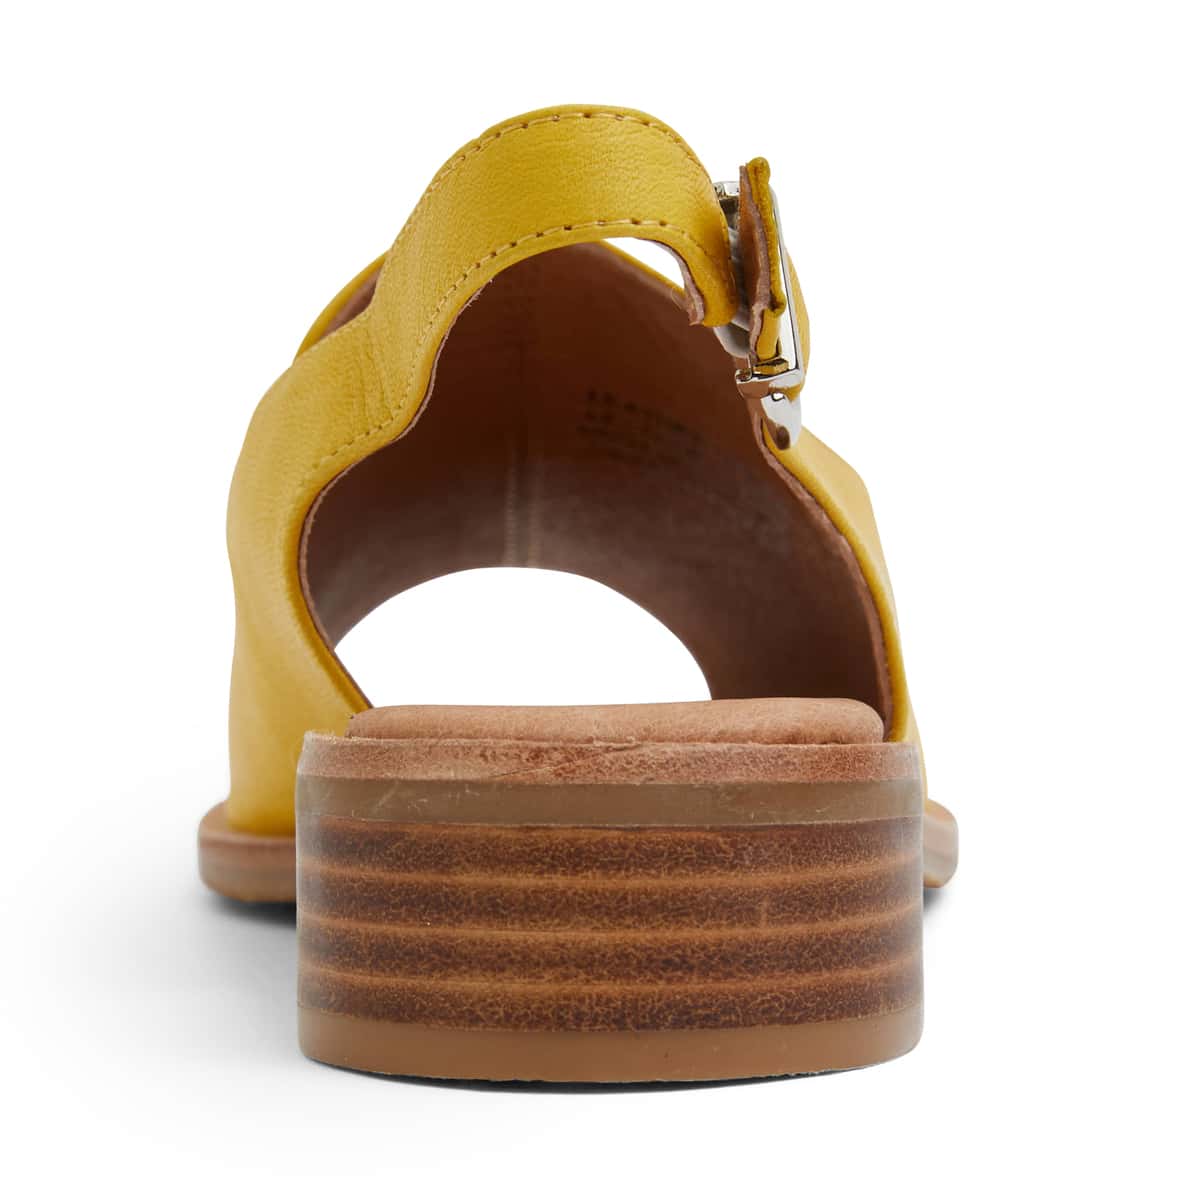 Delaney Sandal in Mustard Leather